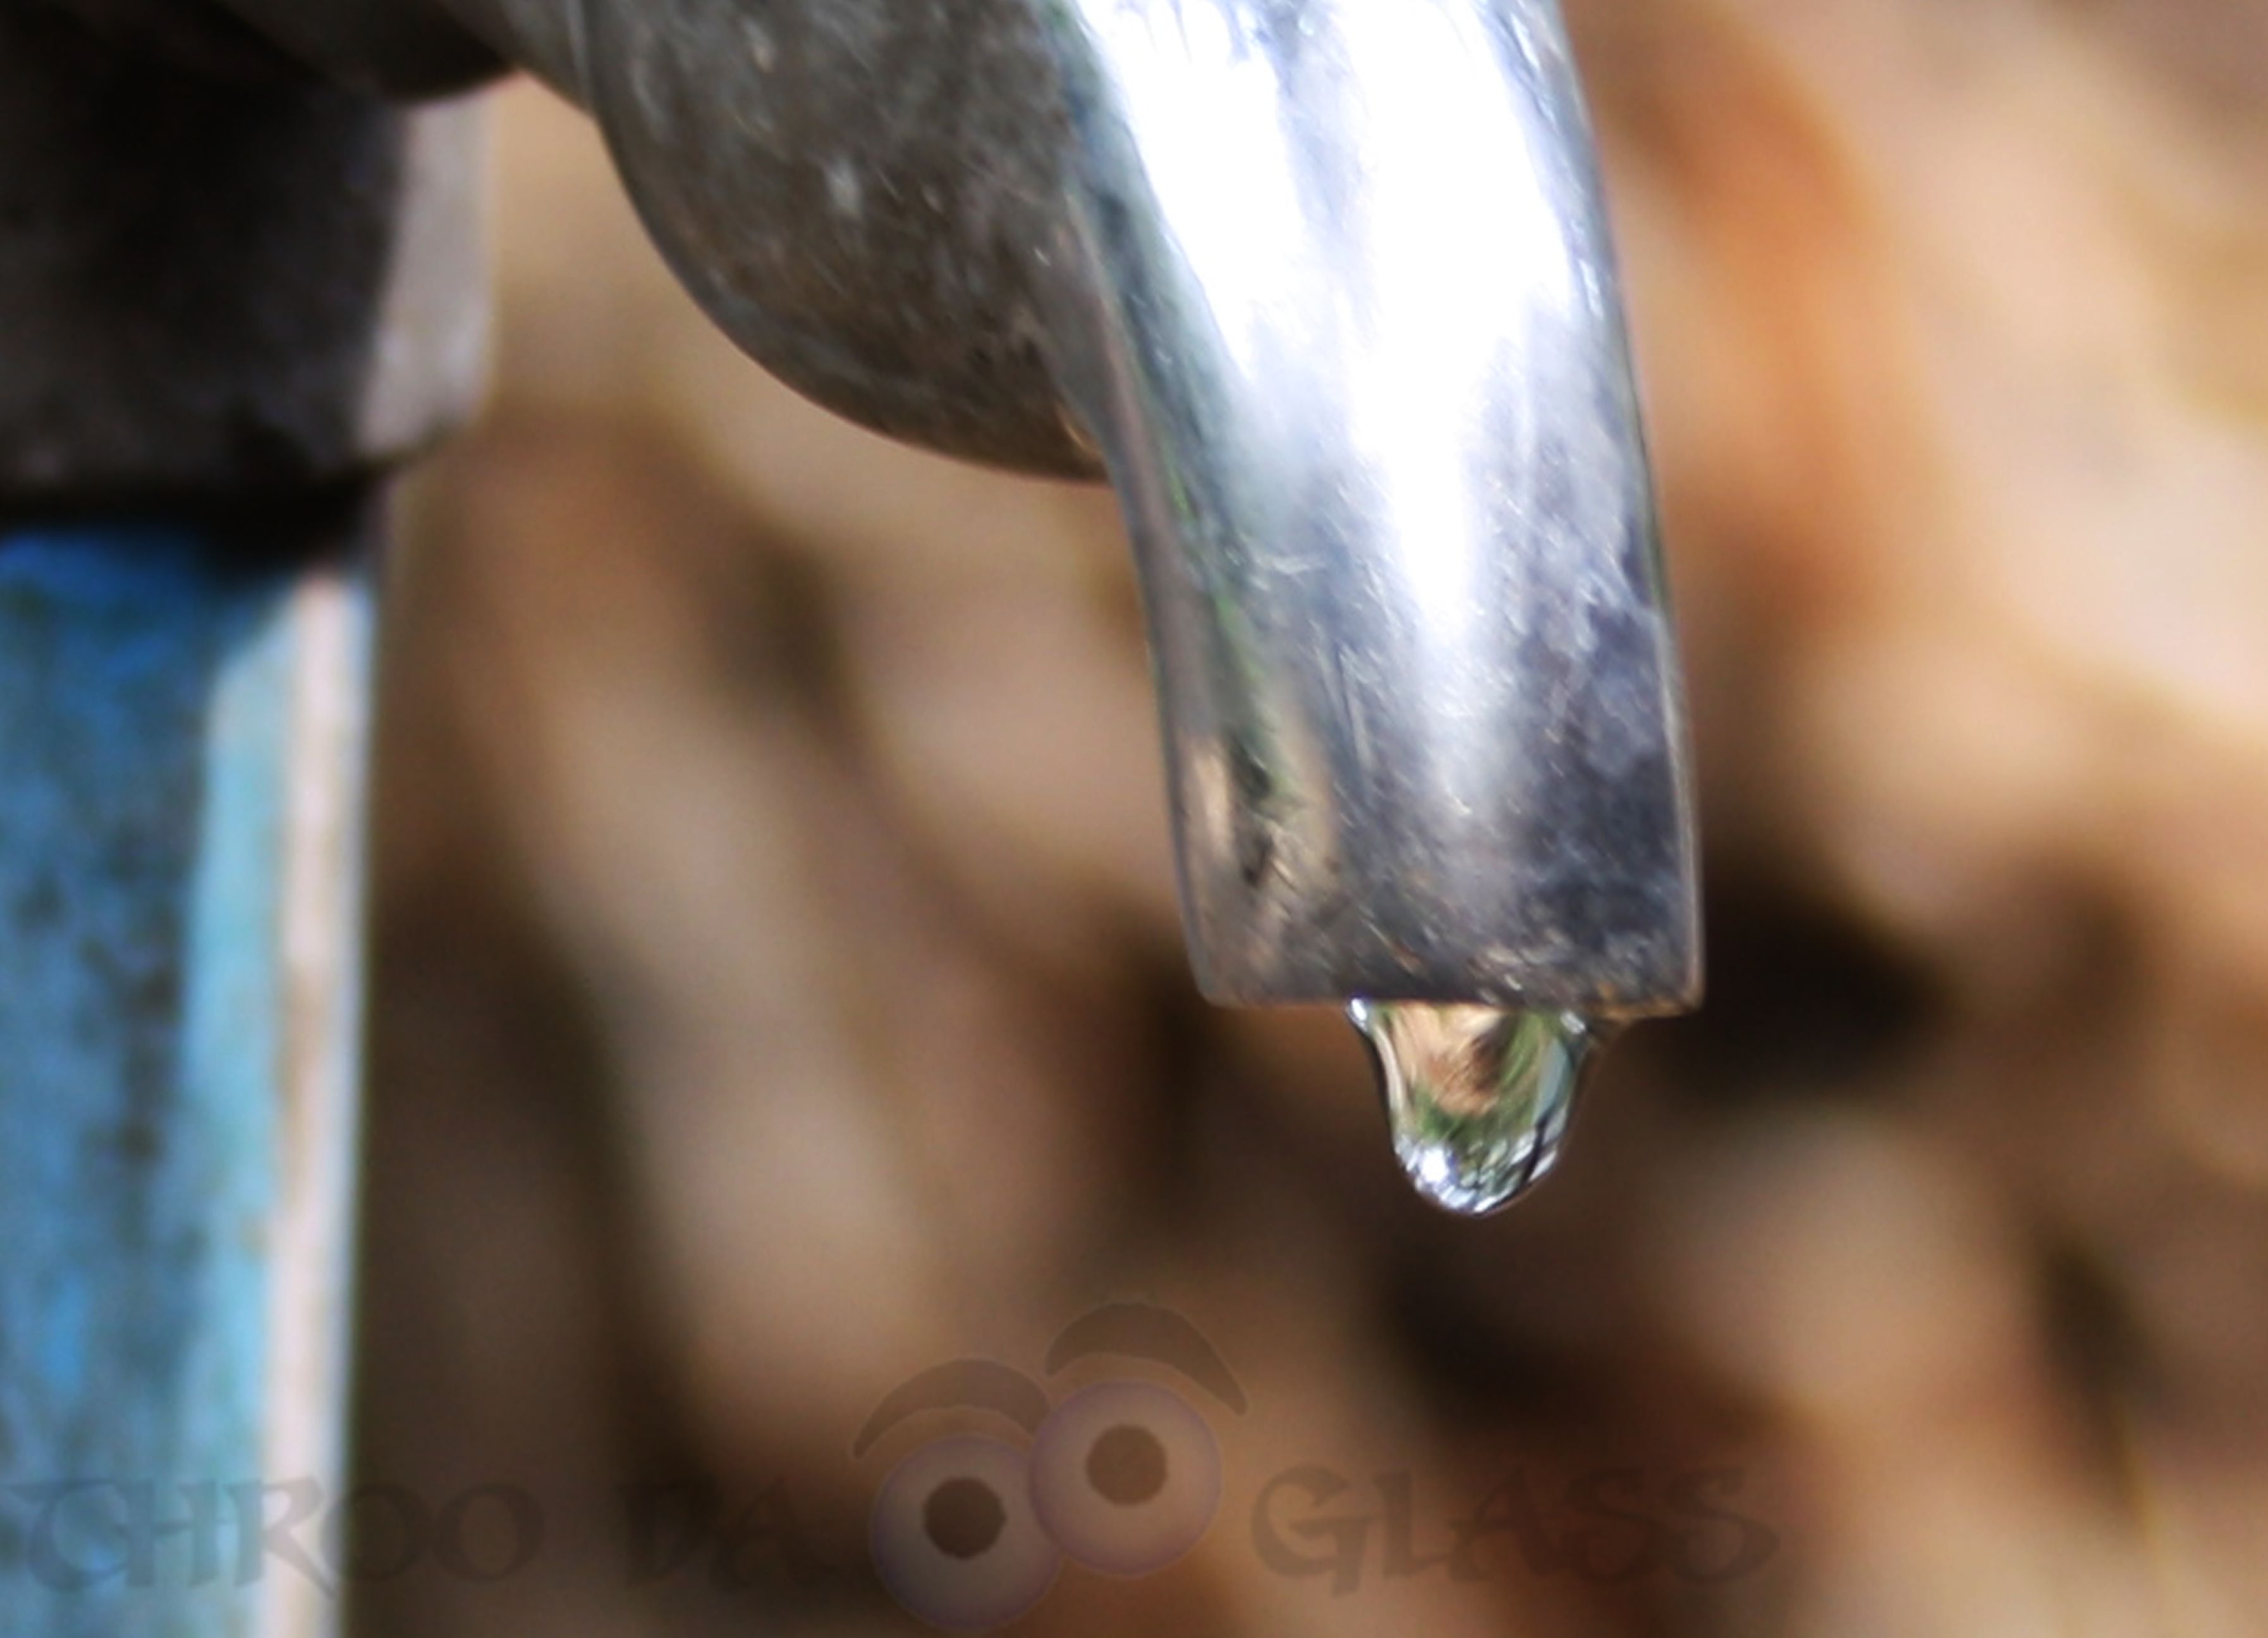 thursday water drop wet liquid save thirst life element challenge pravin,phenomenon,pm,throo da looking glass,bangalore blog